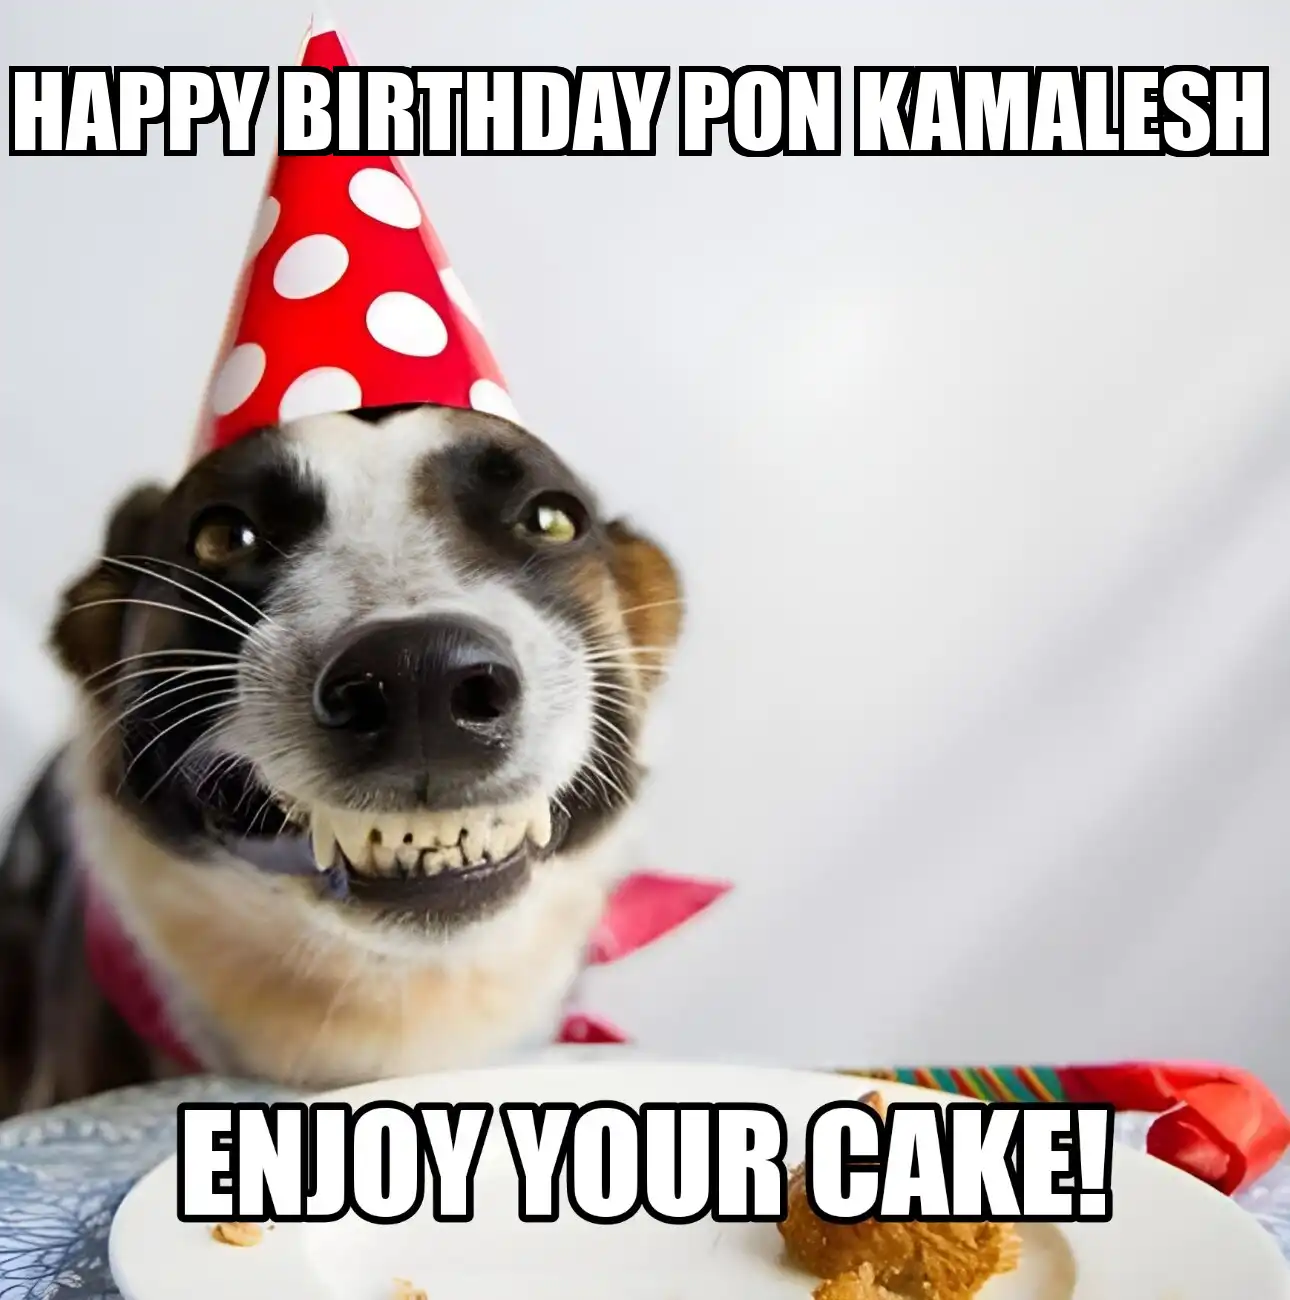 Happy Birthday Pon kamalesh Enjoy Your Cake Dog Meme